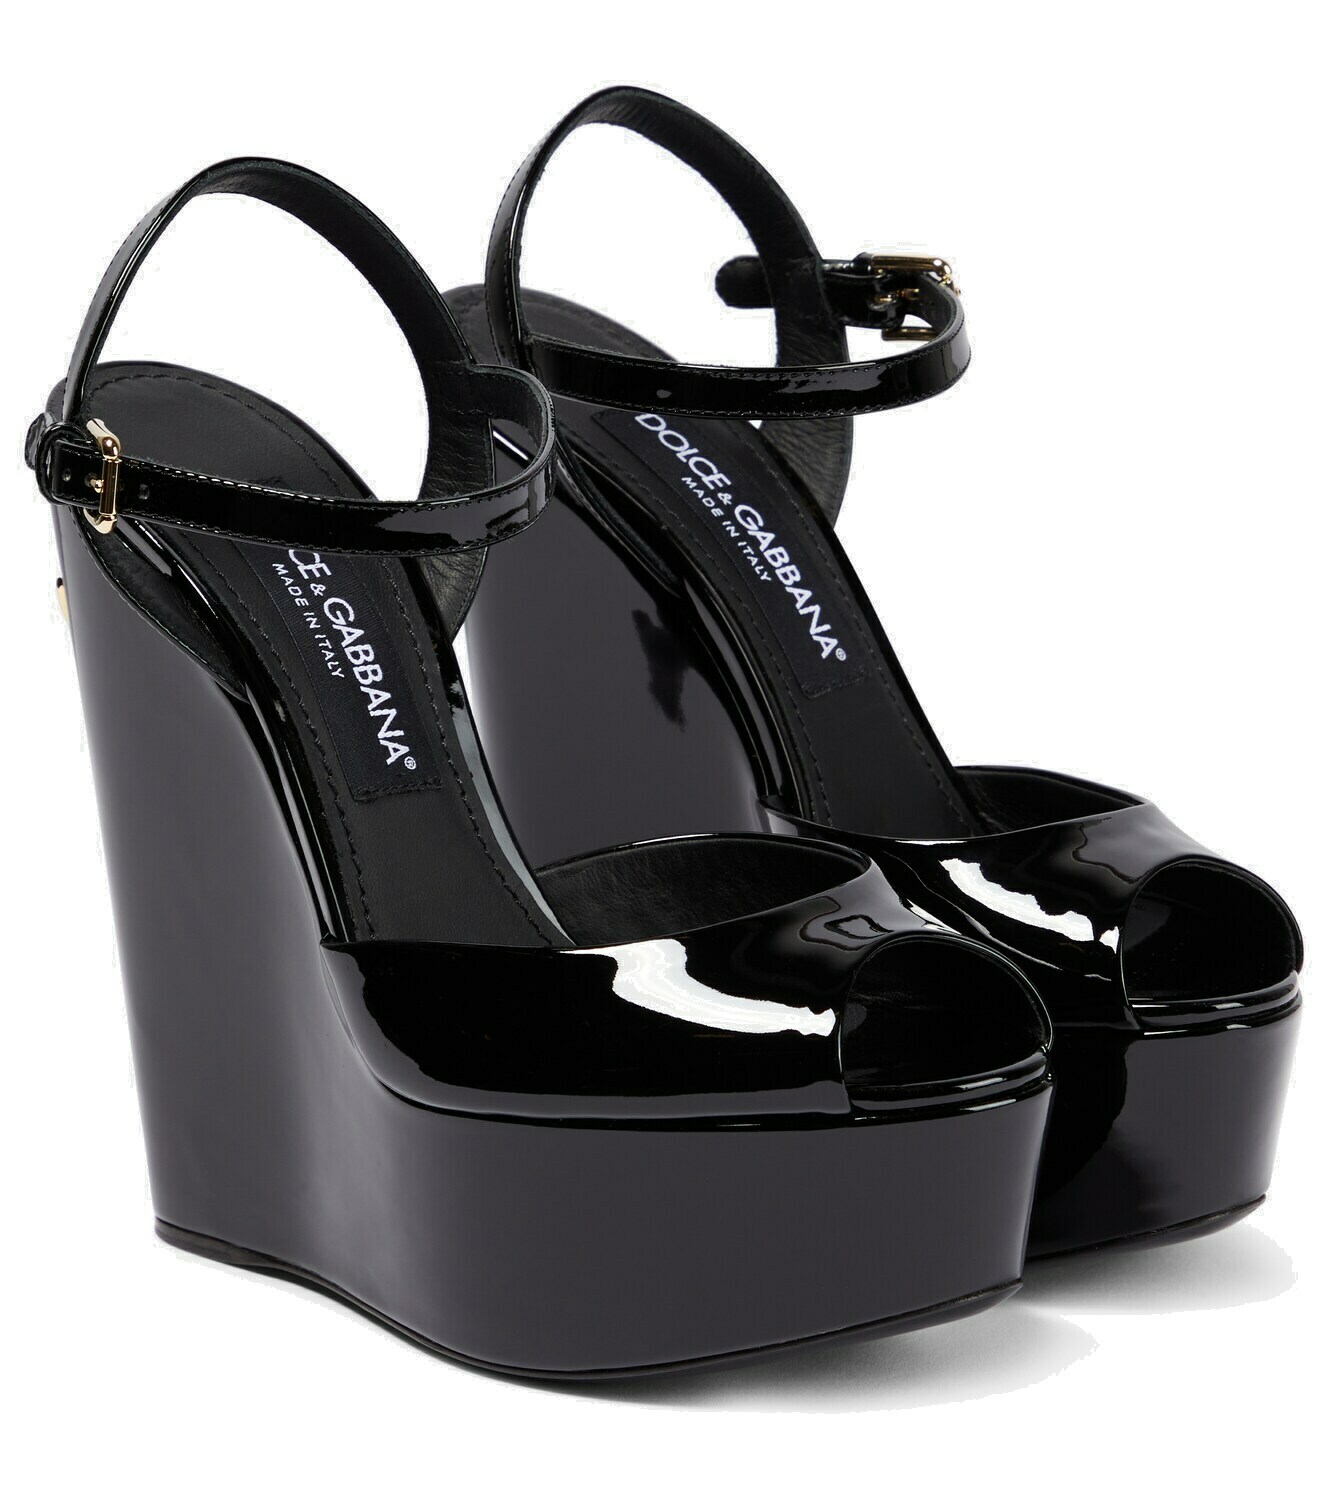 Dolce&Gabbana - Wedge platform patent leather sandals Dolce & Gabbana